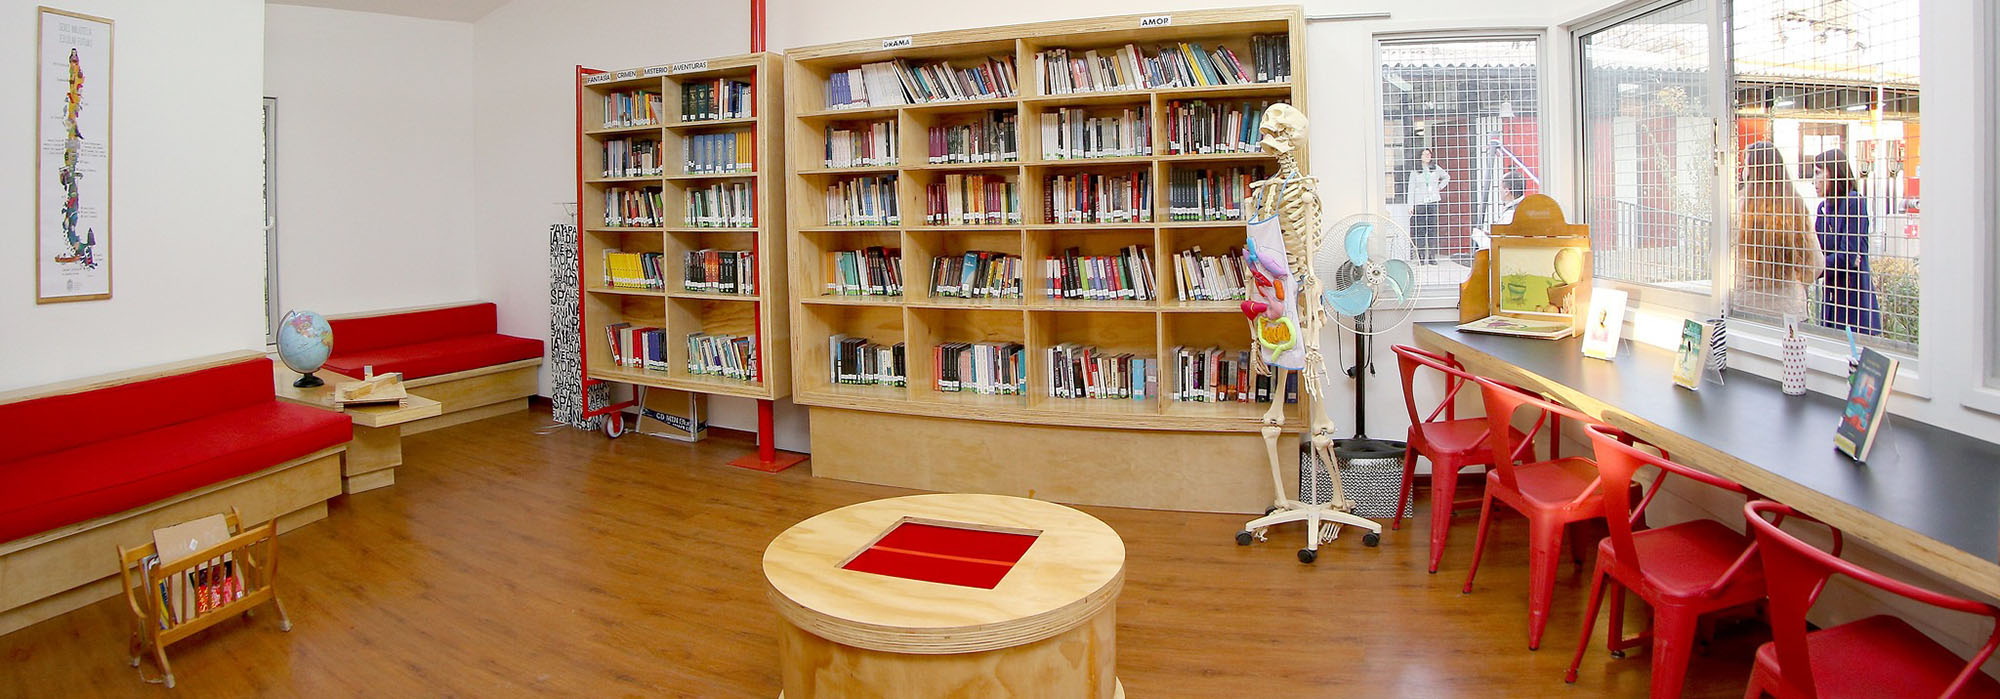 Biblioteca Escolar Futuro